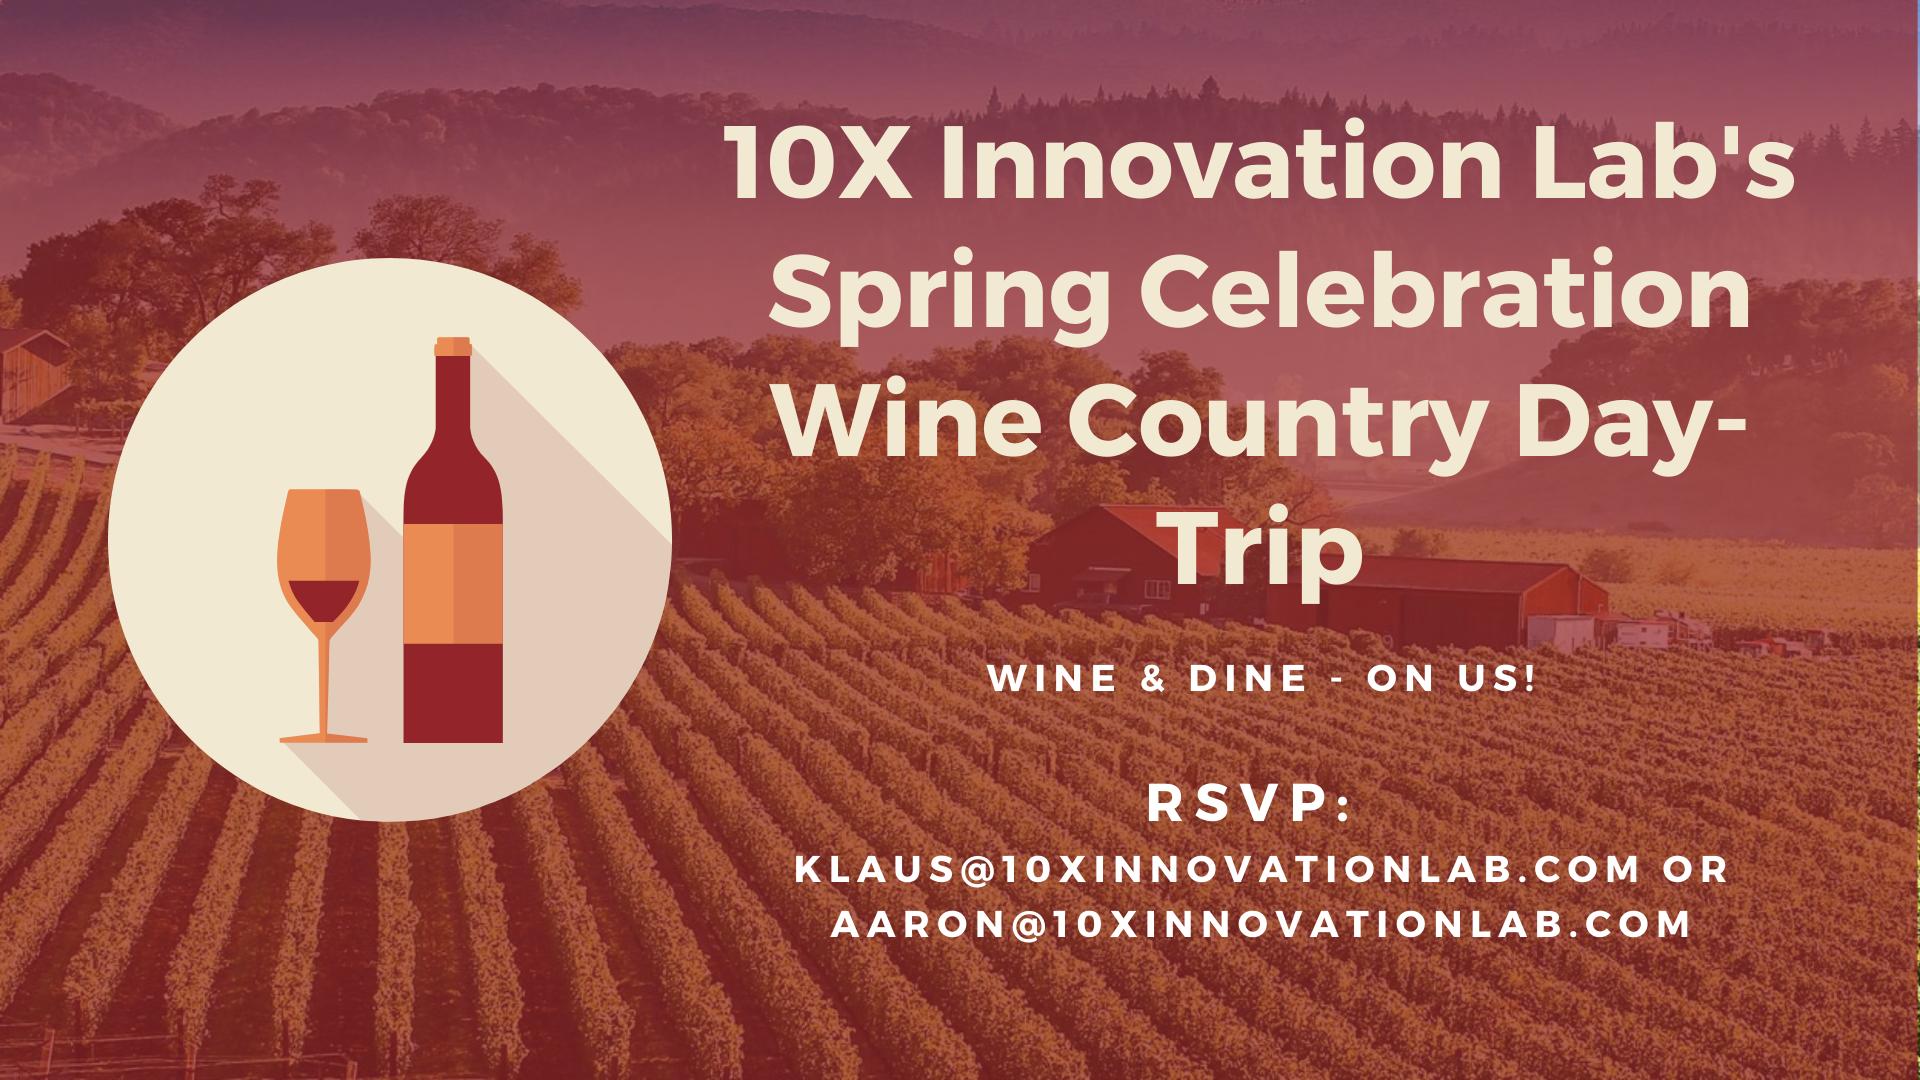 10X Innovation Lab's Spring Celebration Wine Country Day-Trip